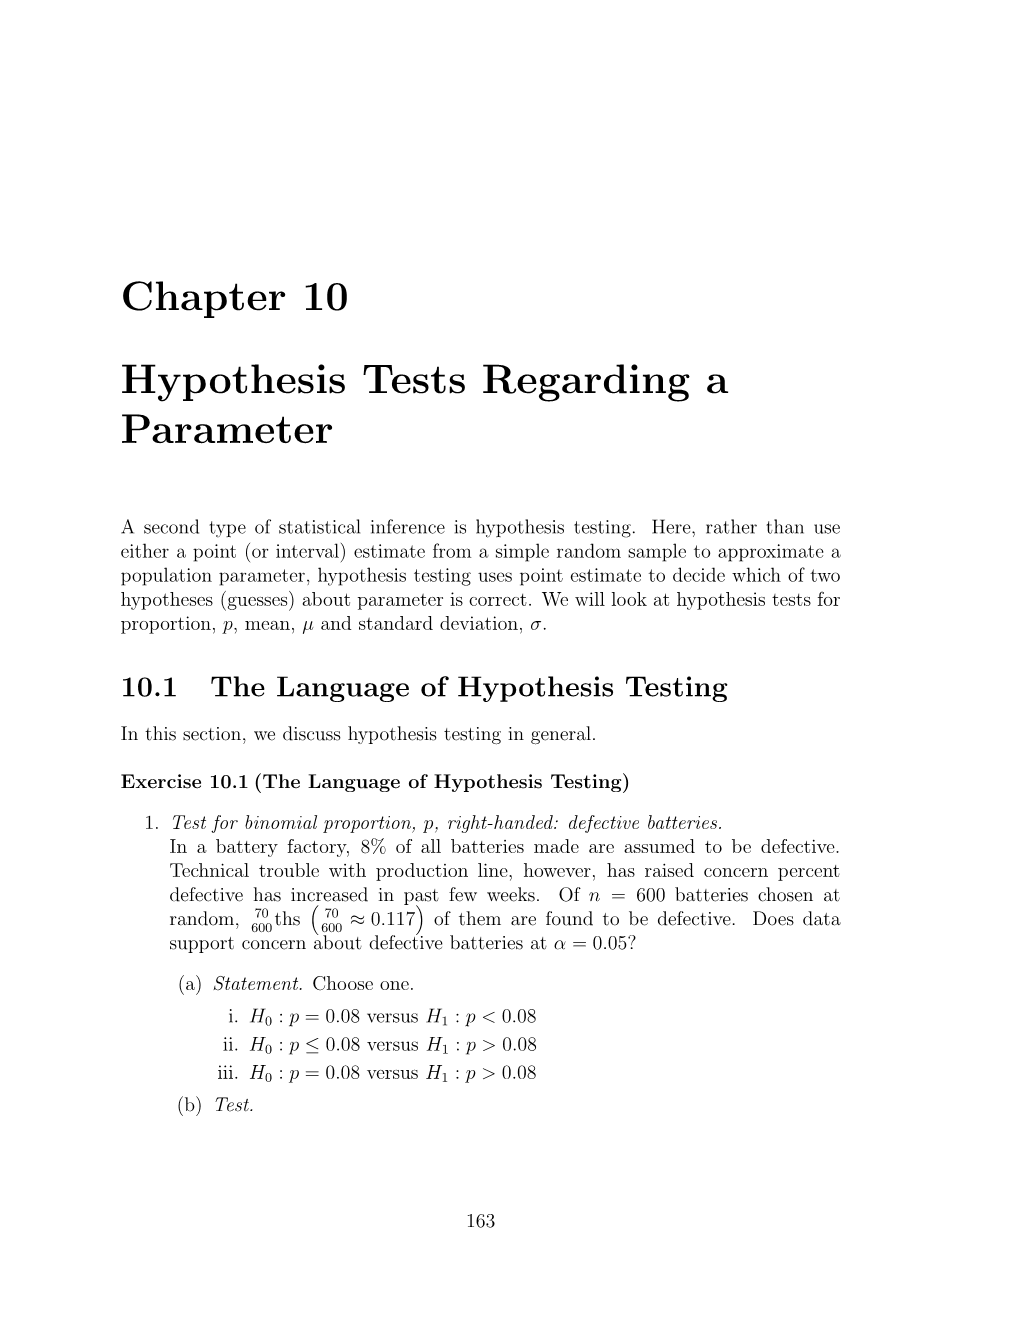 Chapter 10 Hypothesis Tests Regarding a Parameter